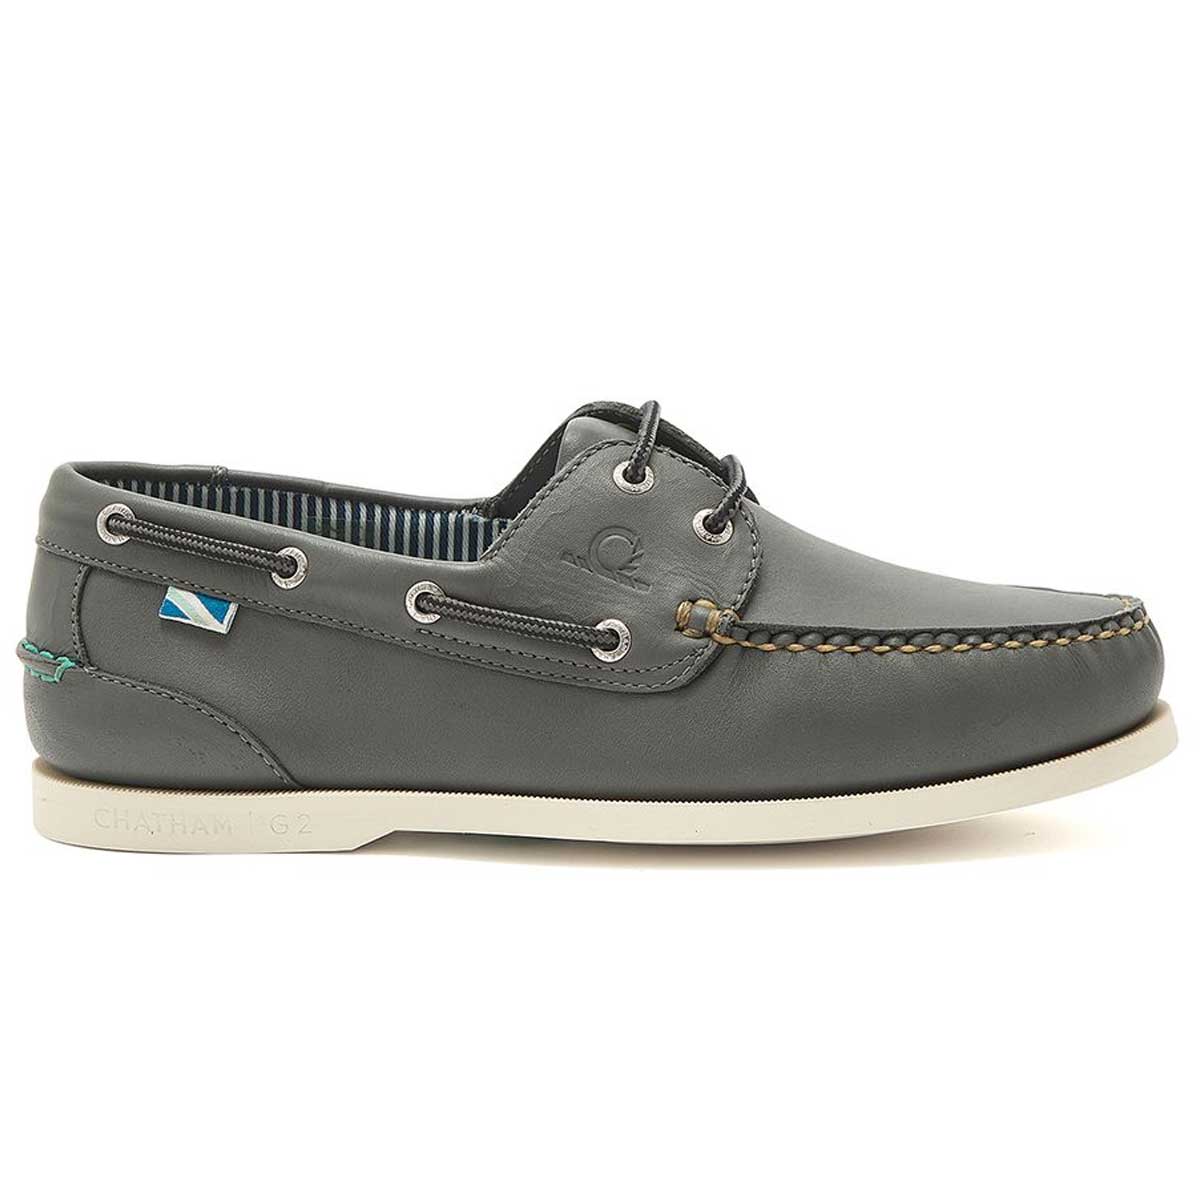 CHATHAM Crew G2 Premium Leather Boat Shoes - Men's - Dark Grey